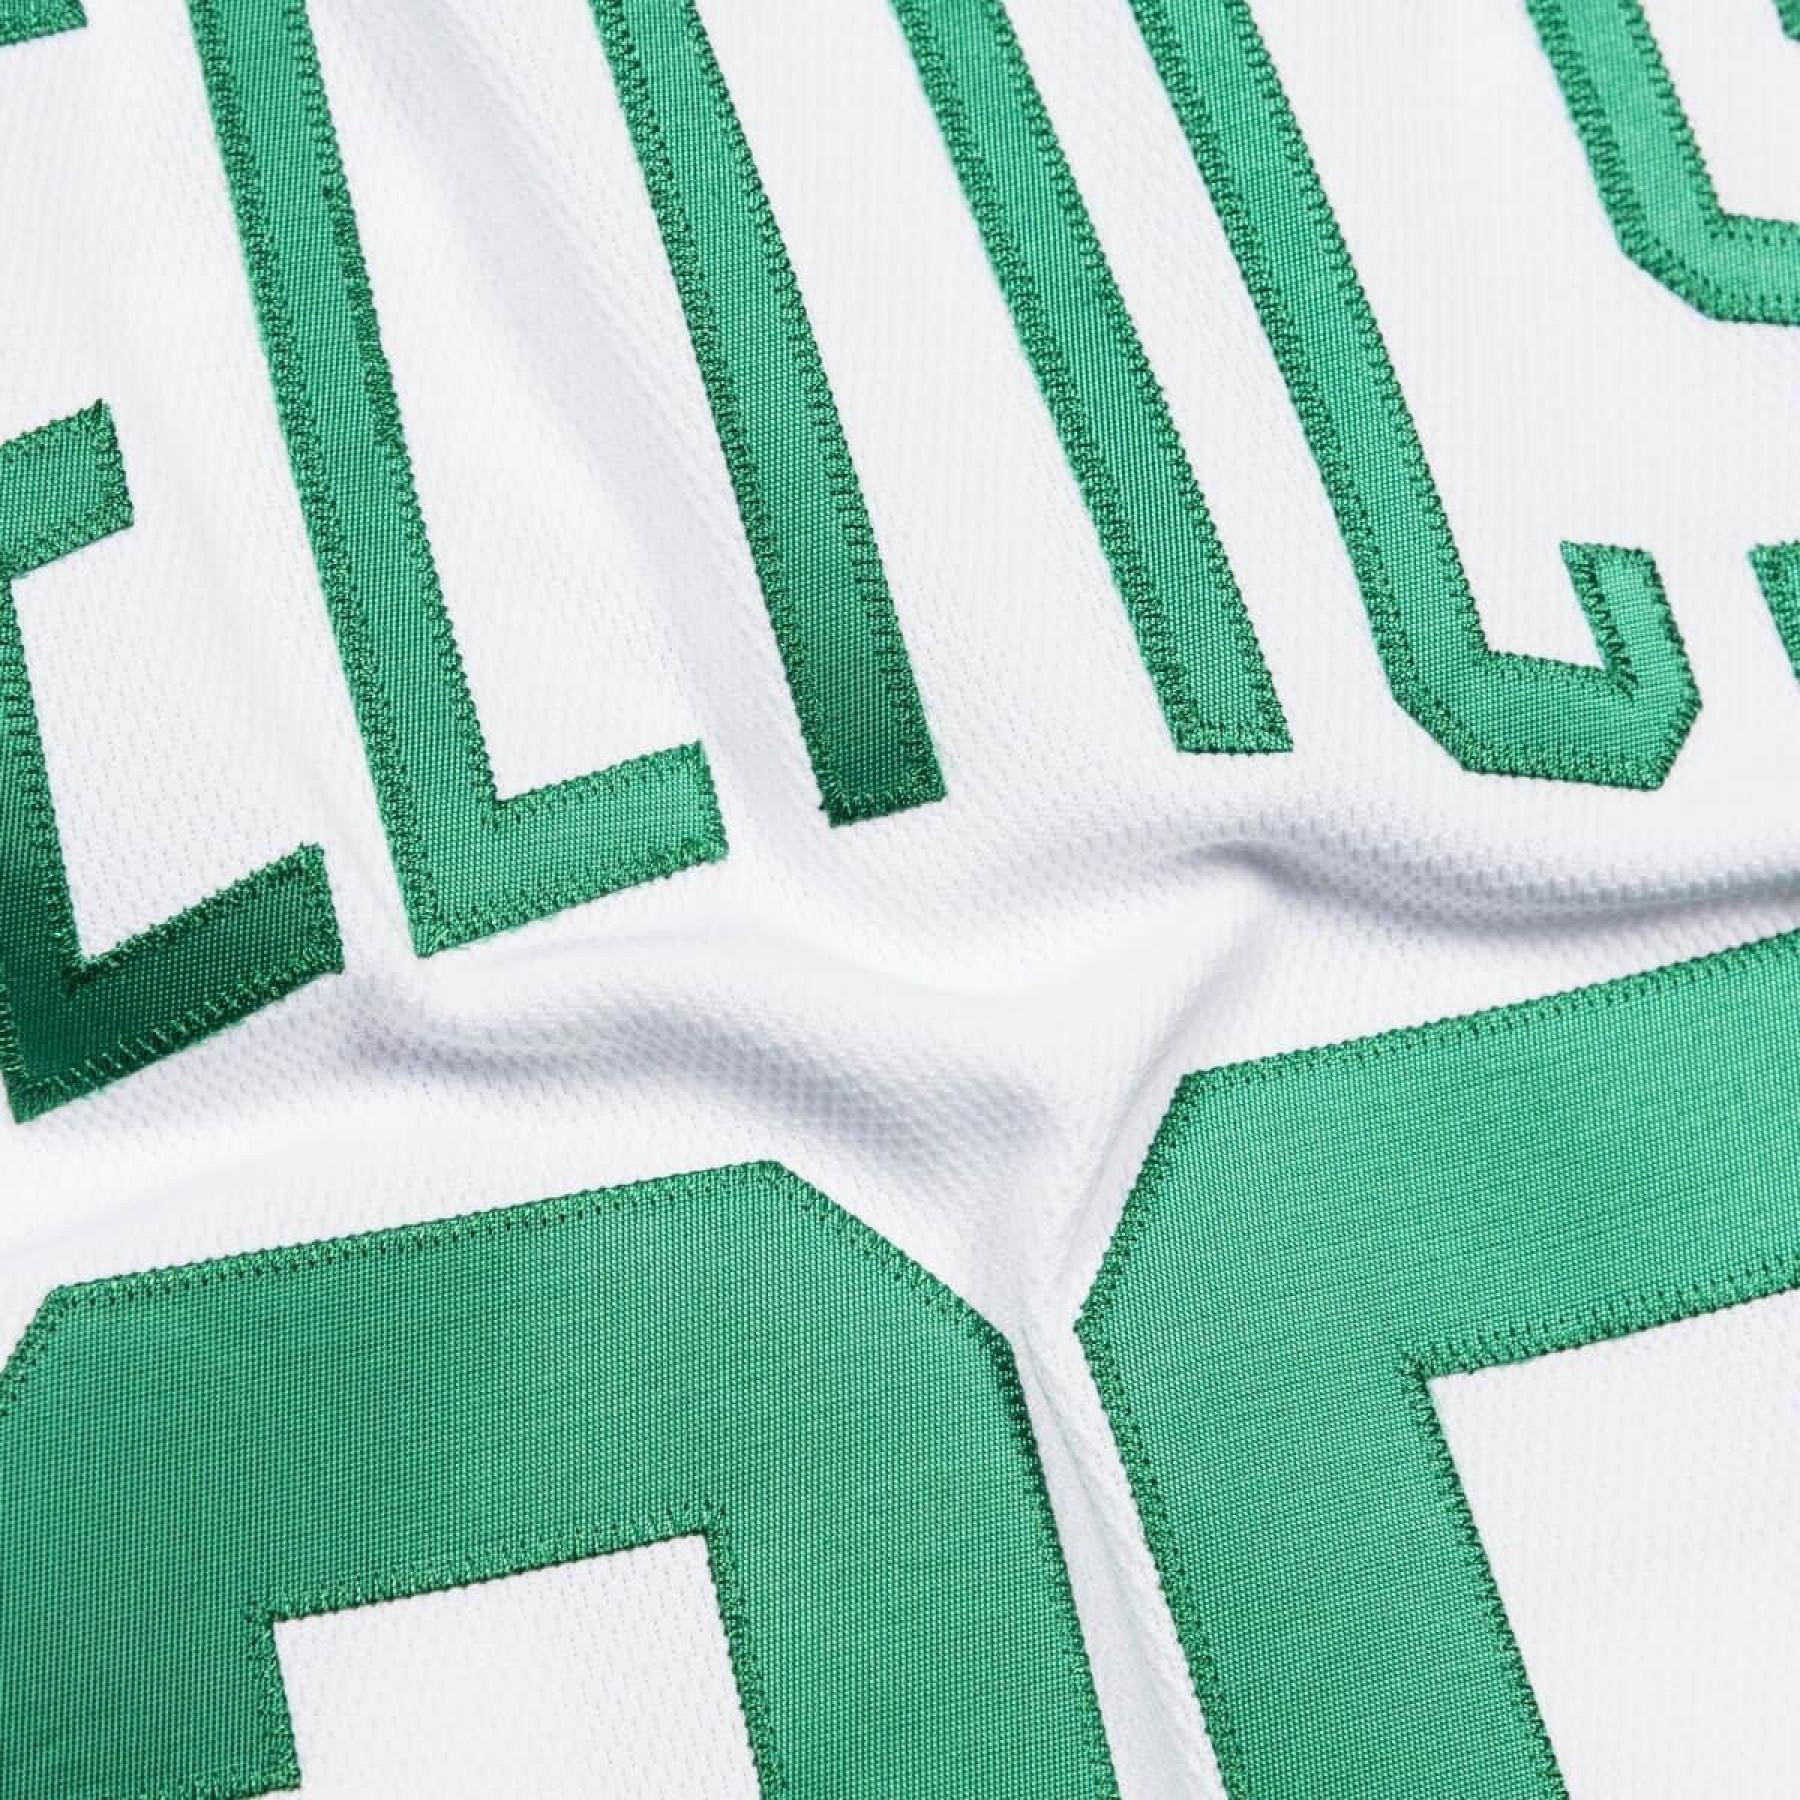 Autentisk tröja Boston Celtics nba